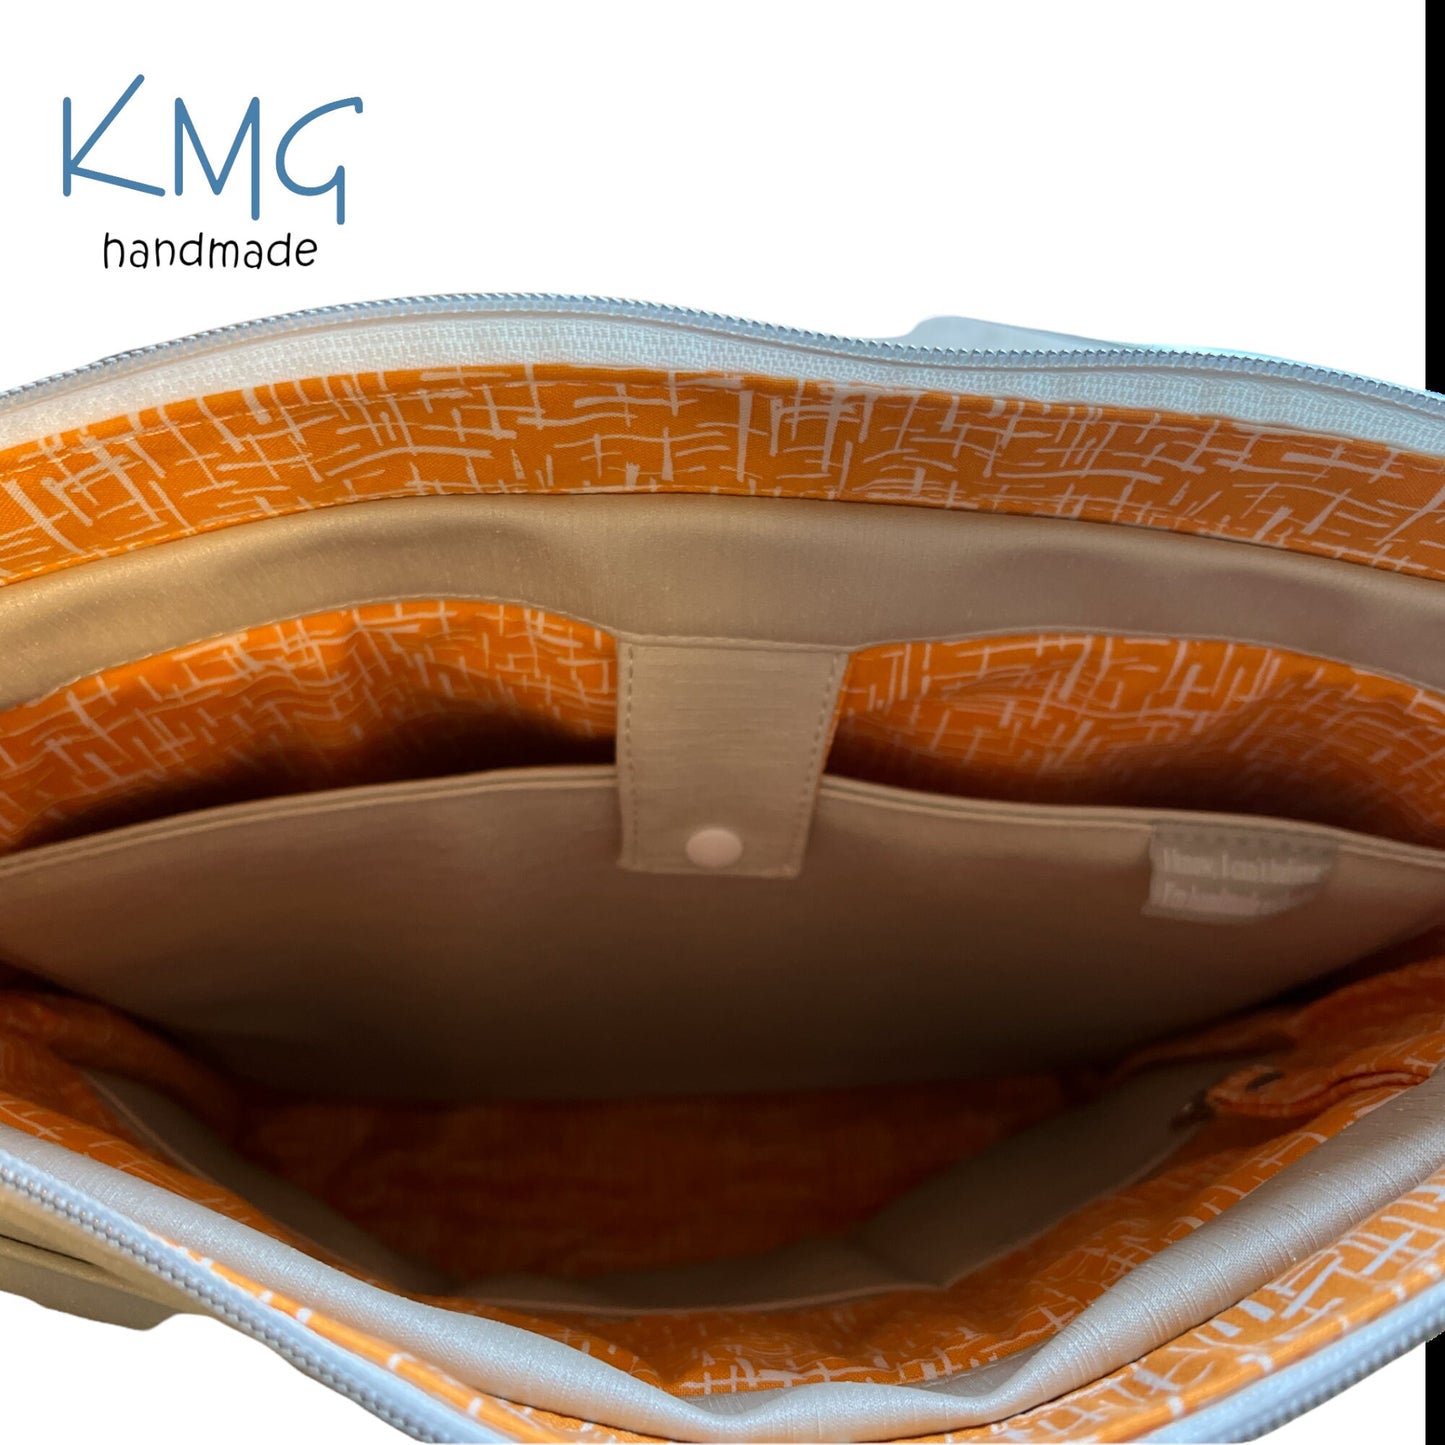 KMGhandmade Original Compass Business Bag - Creamsicle Dream Tote